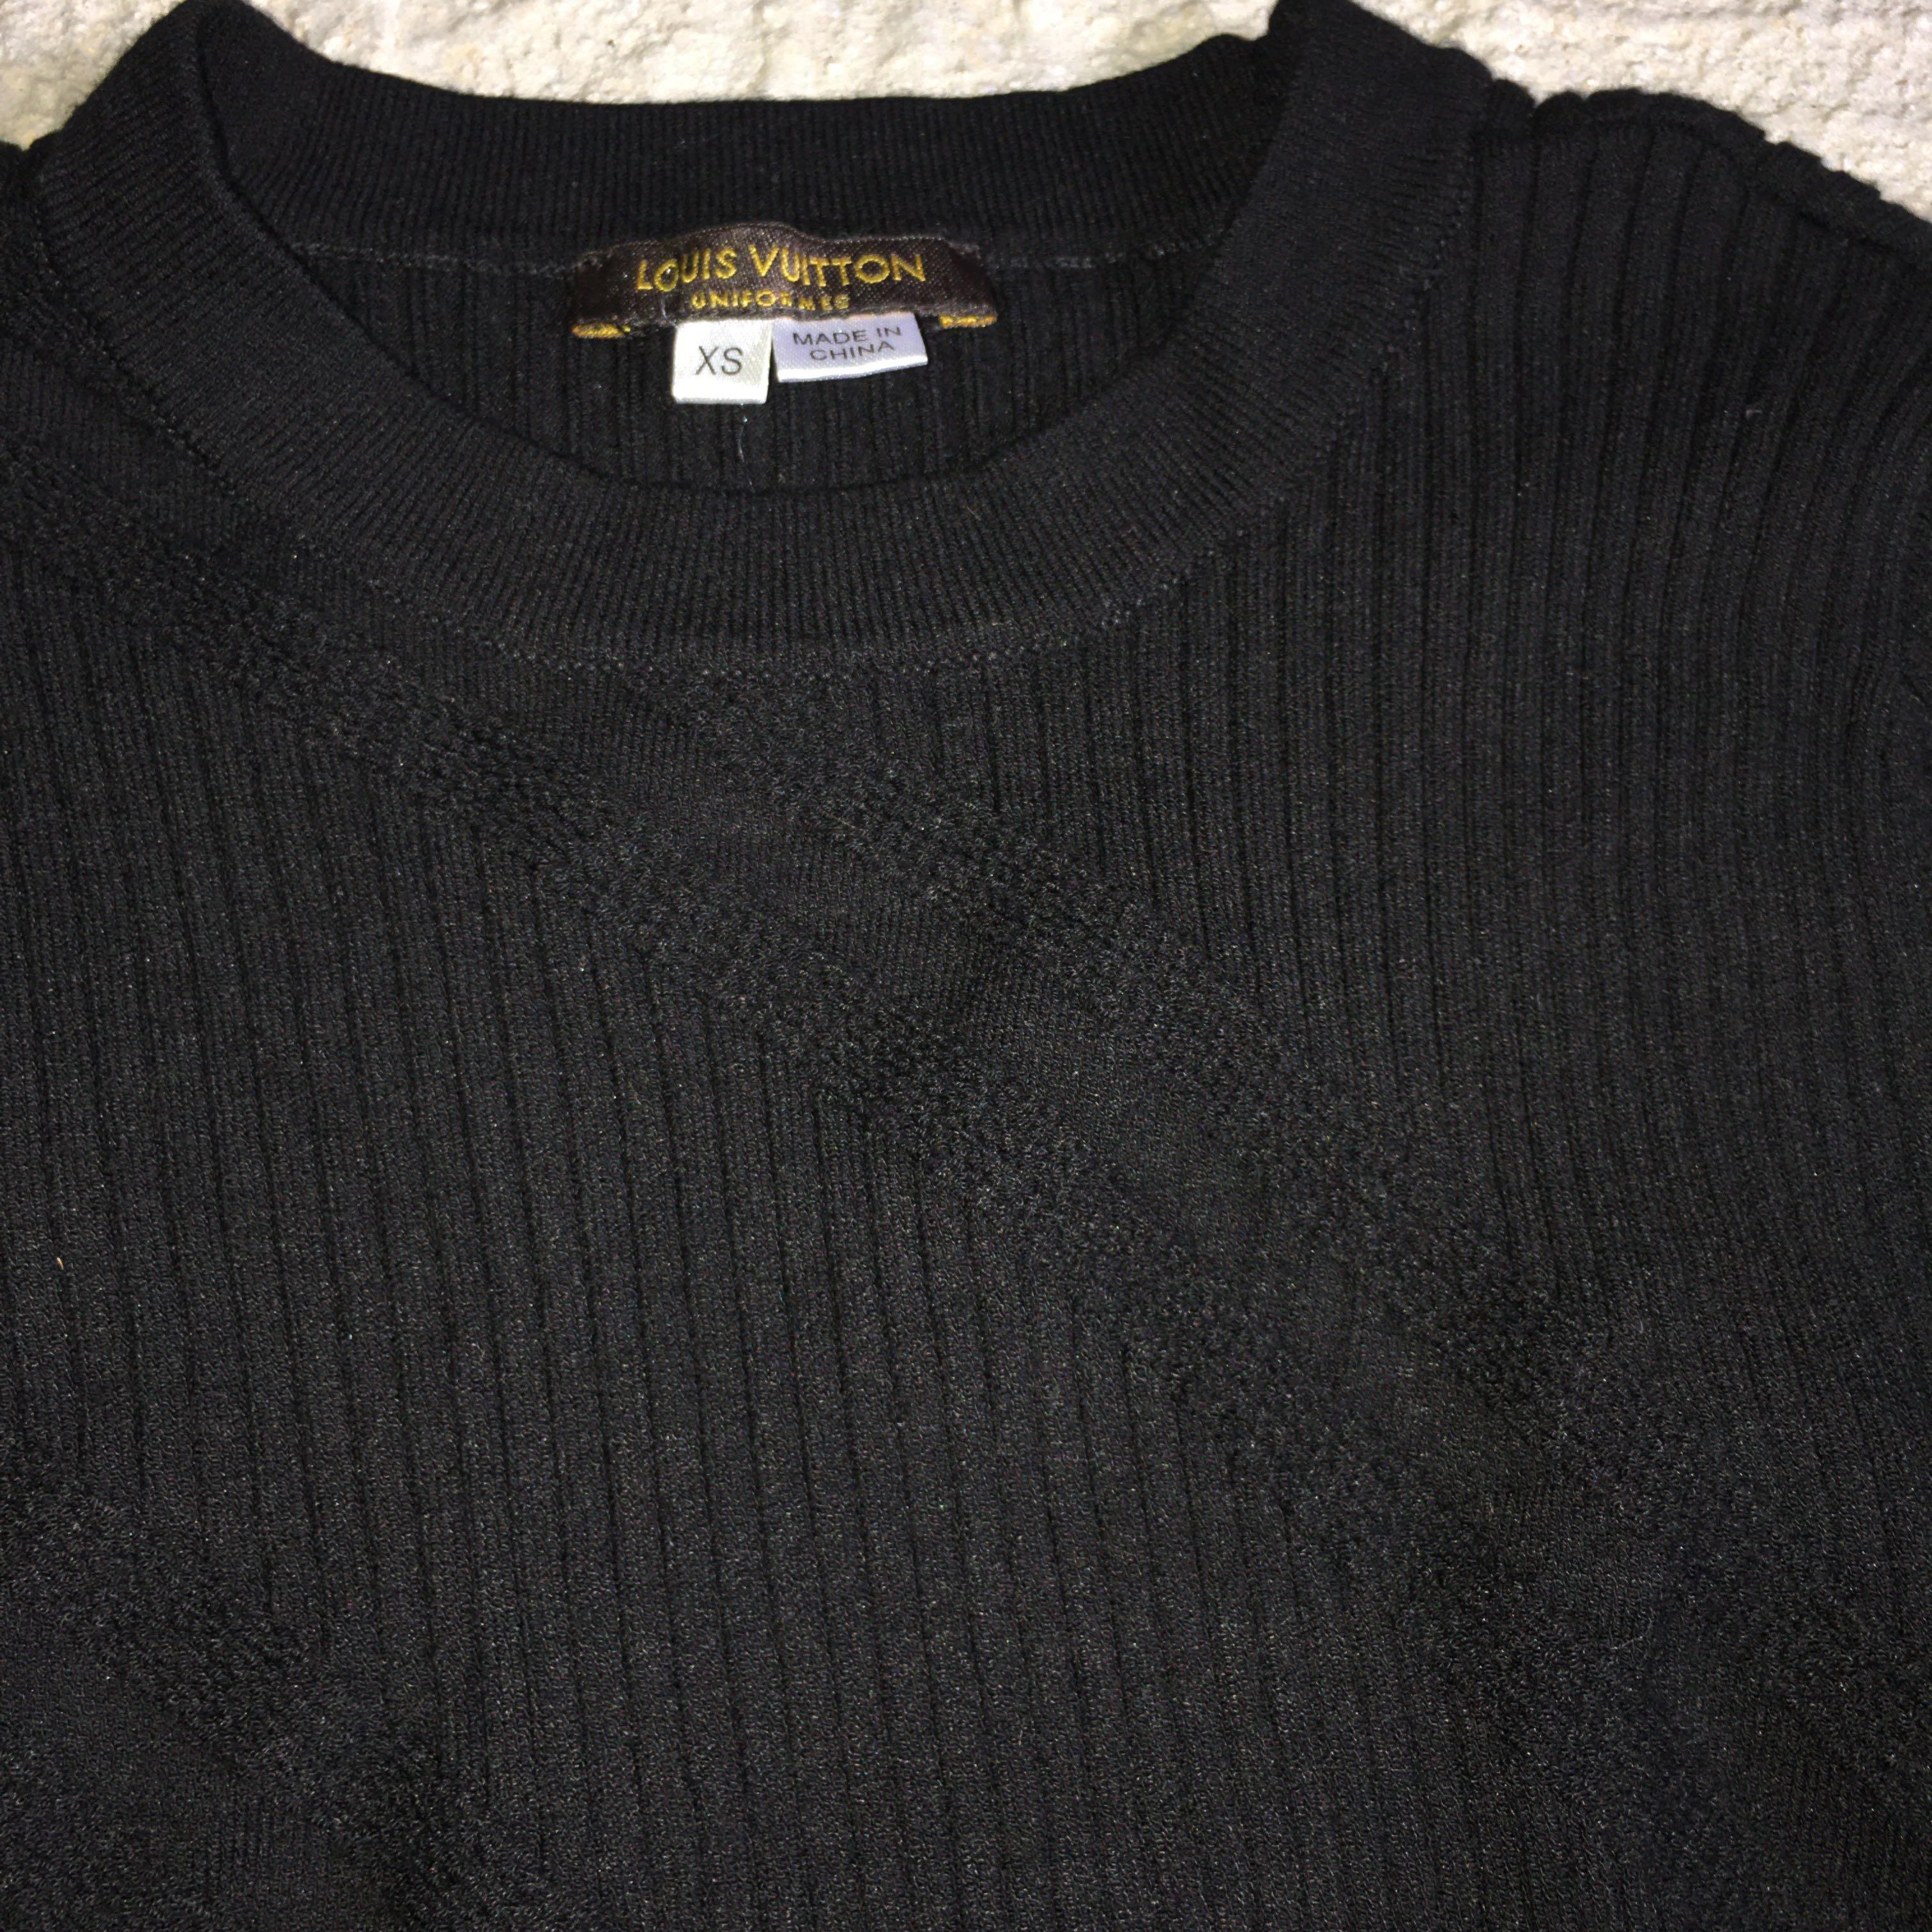 Louis Vuitton Uniformes Strech Navy Sweater in size S